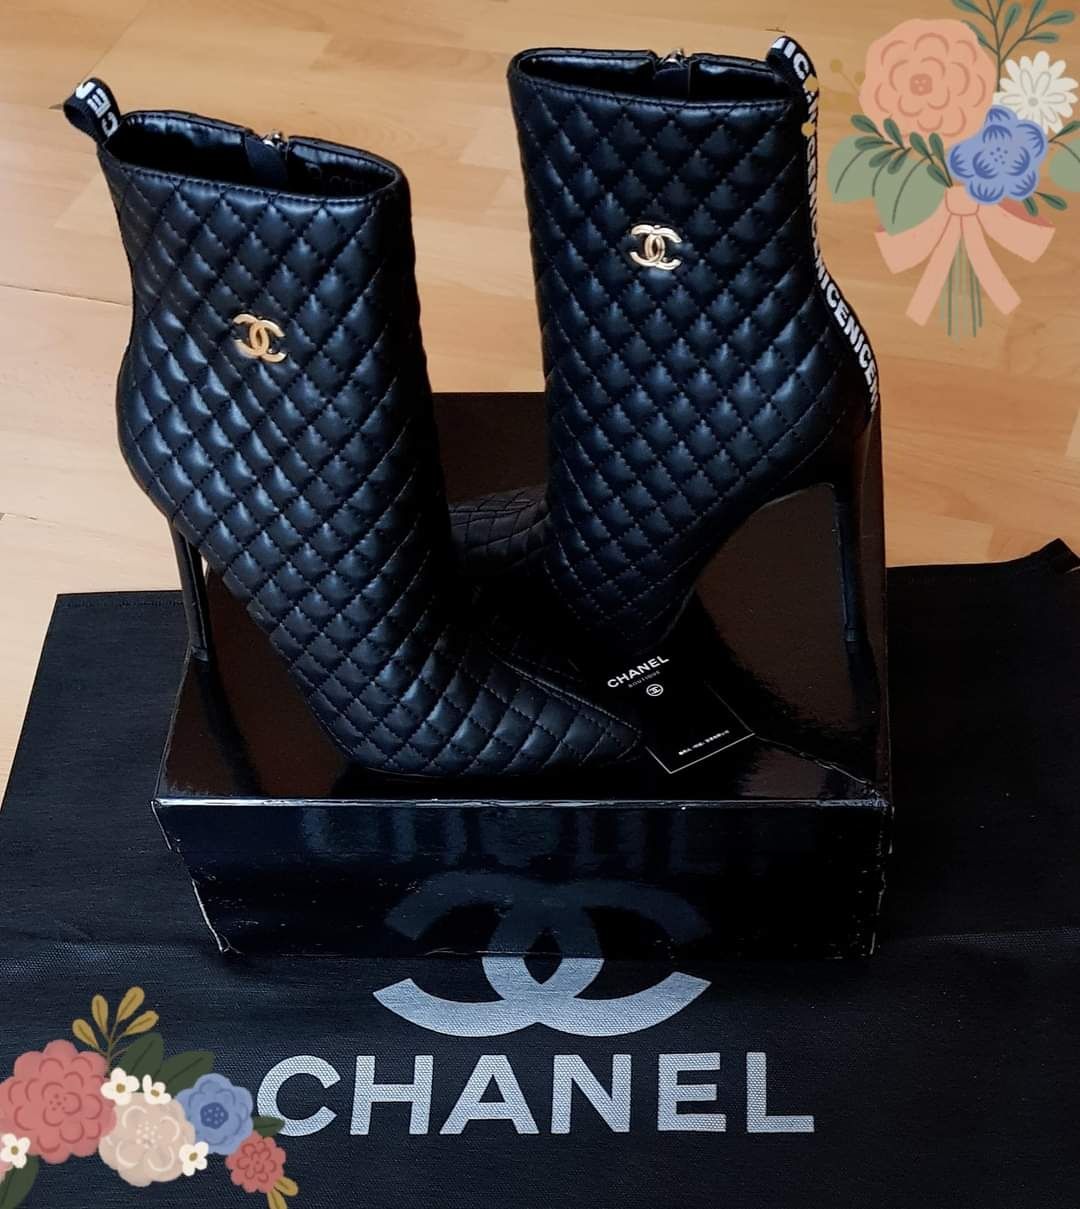 Botine Chanel new model import Franța logo metalic auriu, saculet